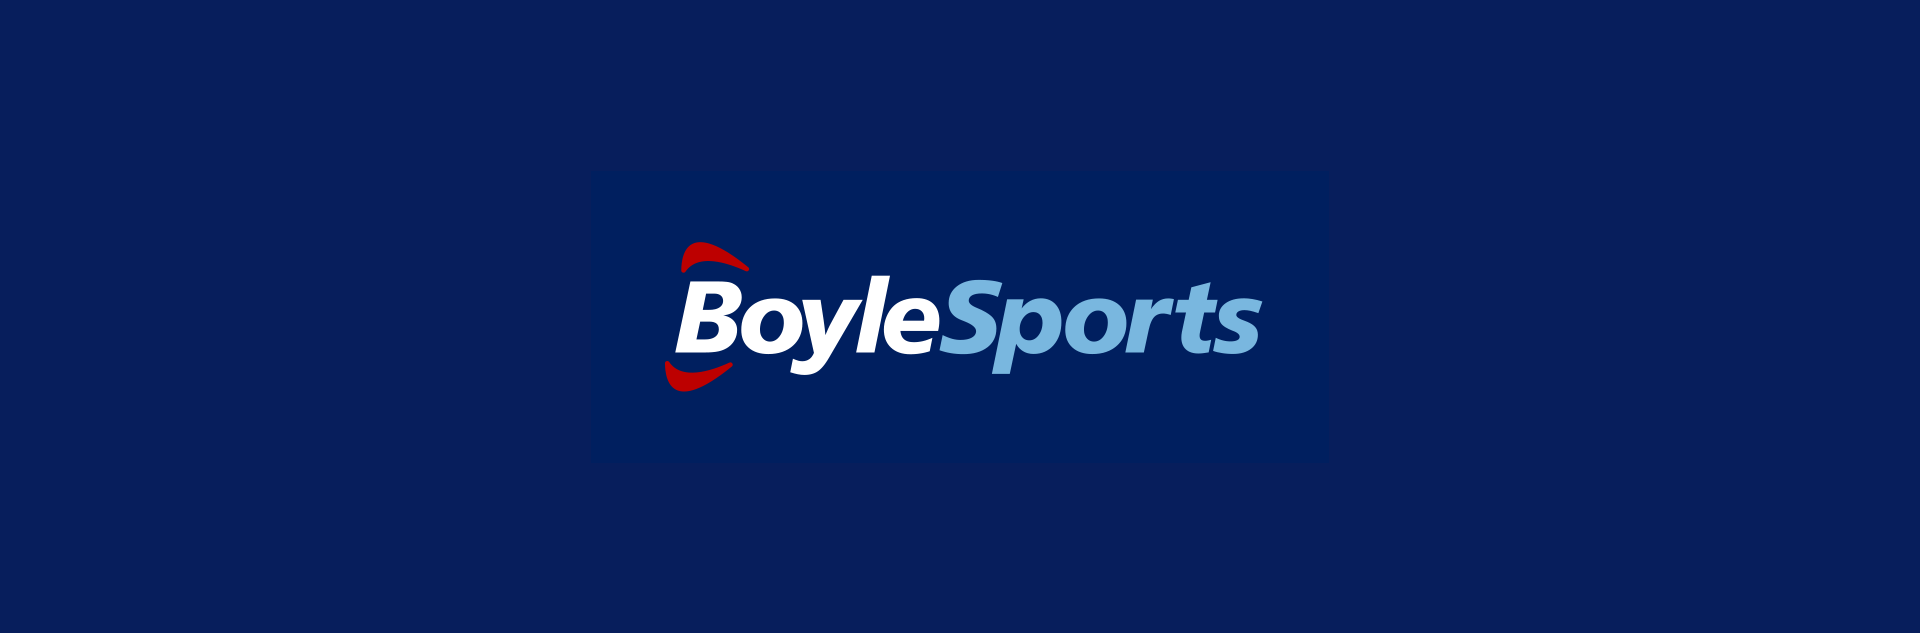 Introducing BoyleSports sportsbook 